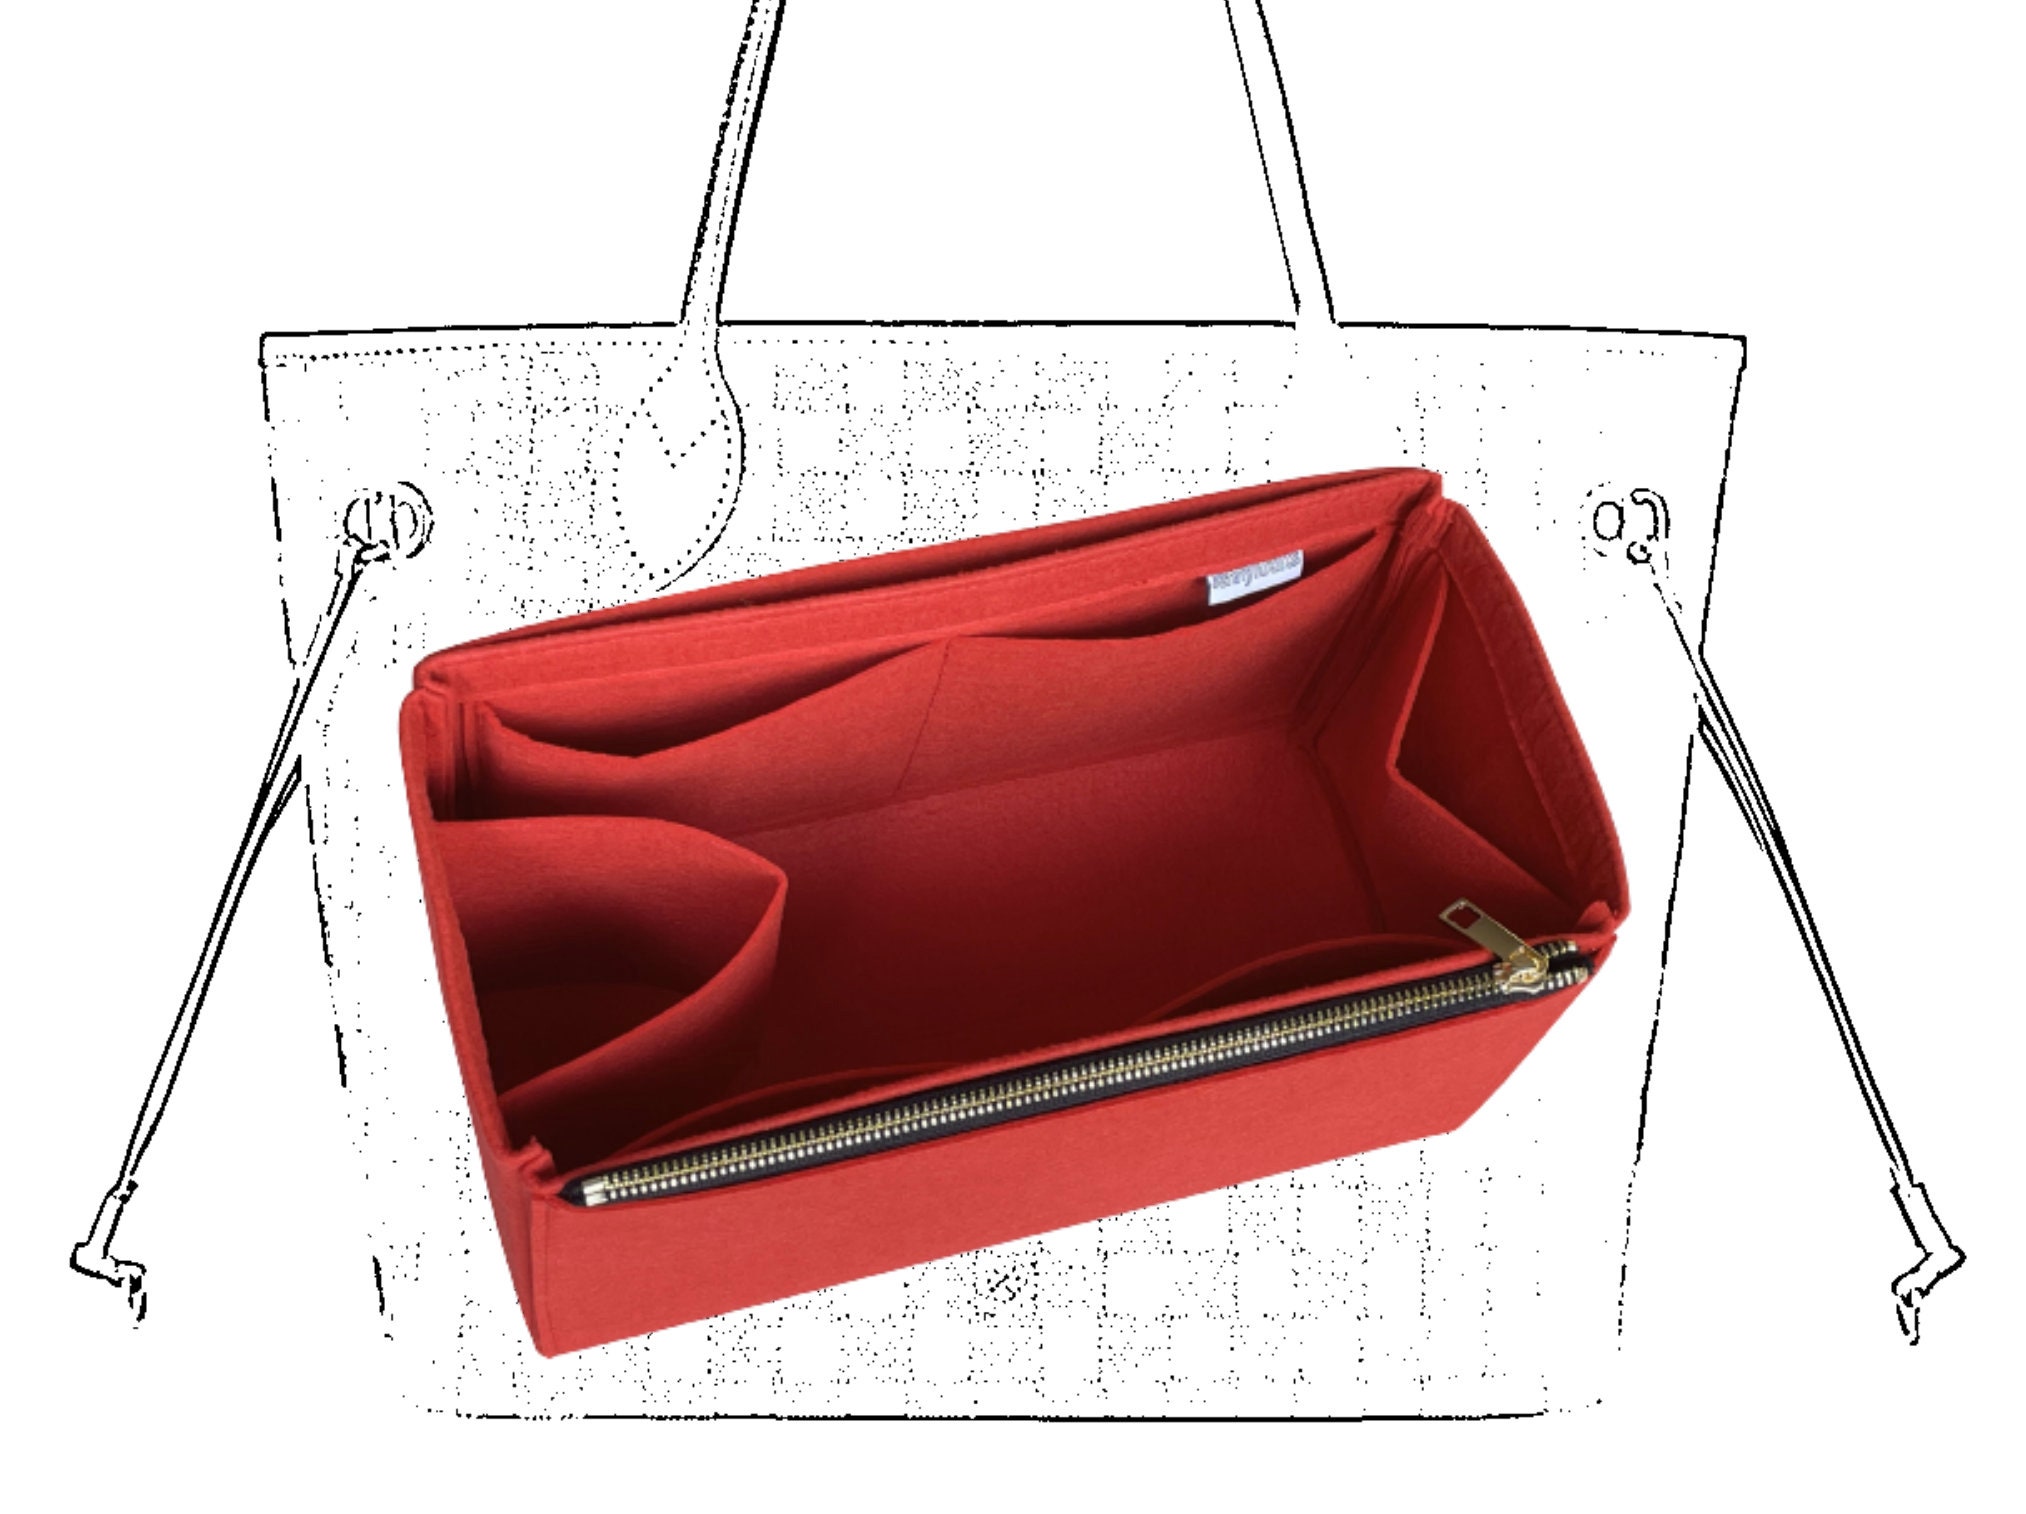 [Neverfull GM mm PM] Felt Tote Bag Organizer, Purse Insert (3mm Felt, Detachable Pouch w/ Metal Zip)